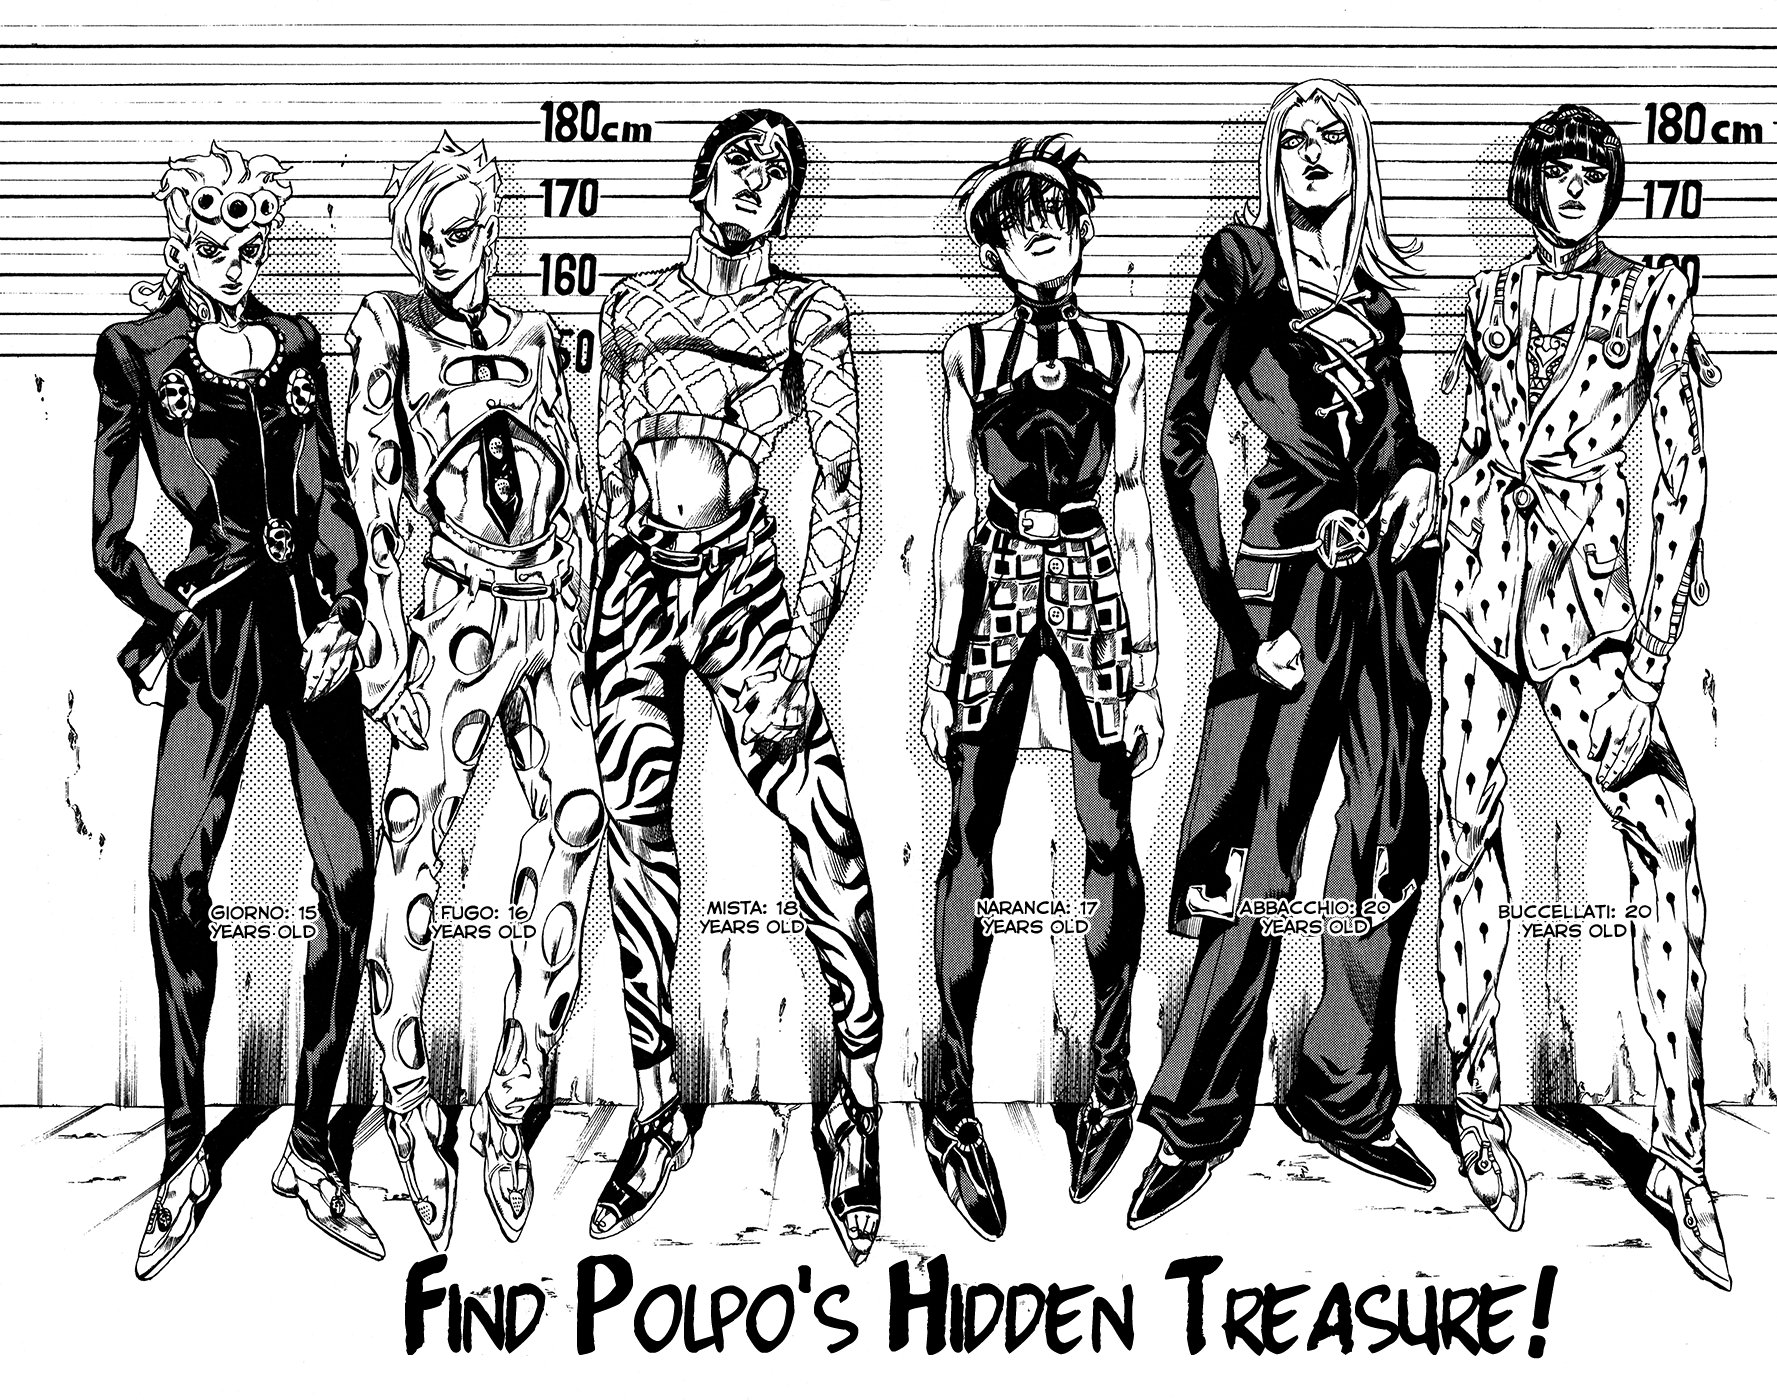 Jojo's Bizarre Adventure Part 5 - Vento Aureo Vol.3 Chapter 18: Find Polpo's Hidden Treasure! - Picture 2